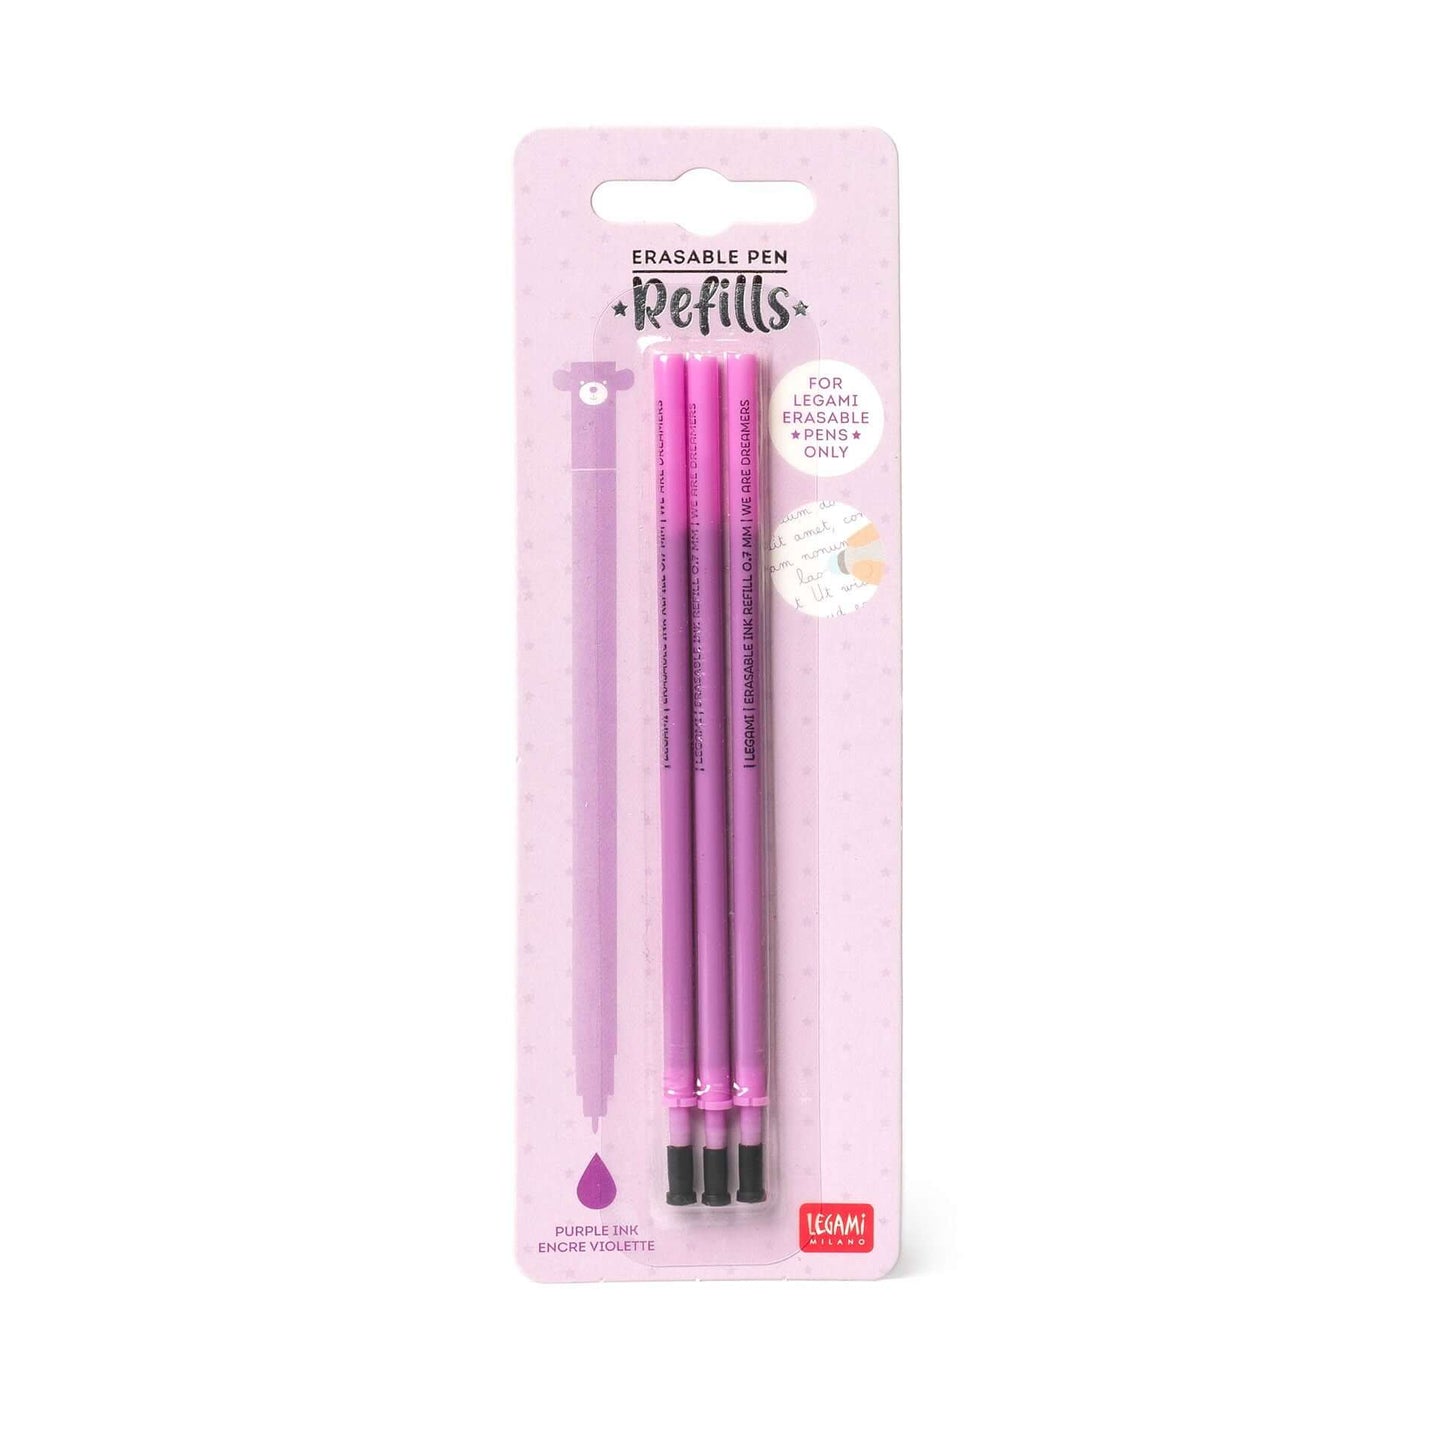 3 Purple Legami Erasable Pen Refills